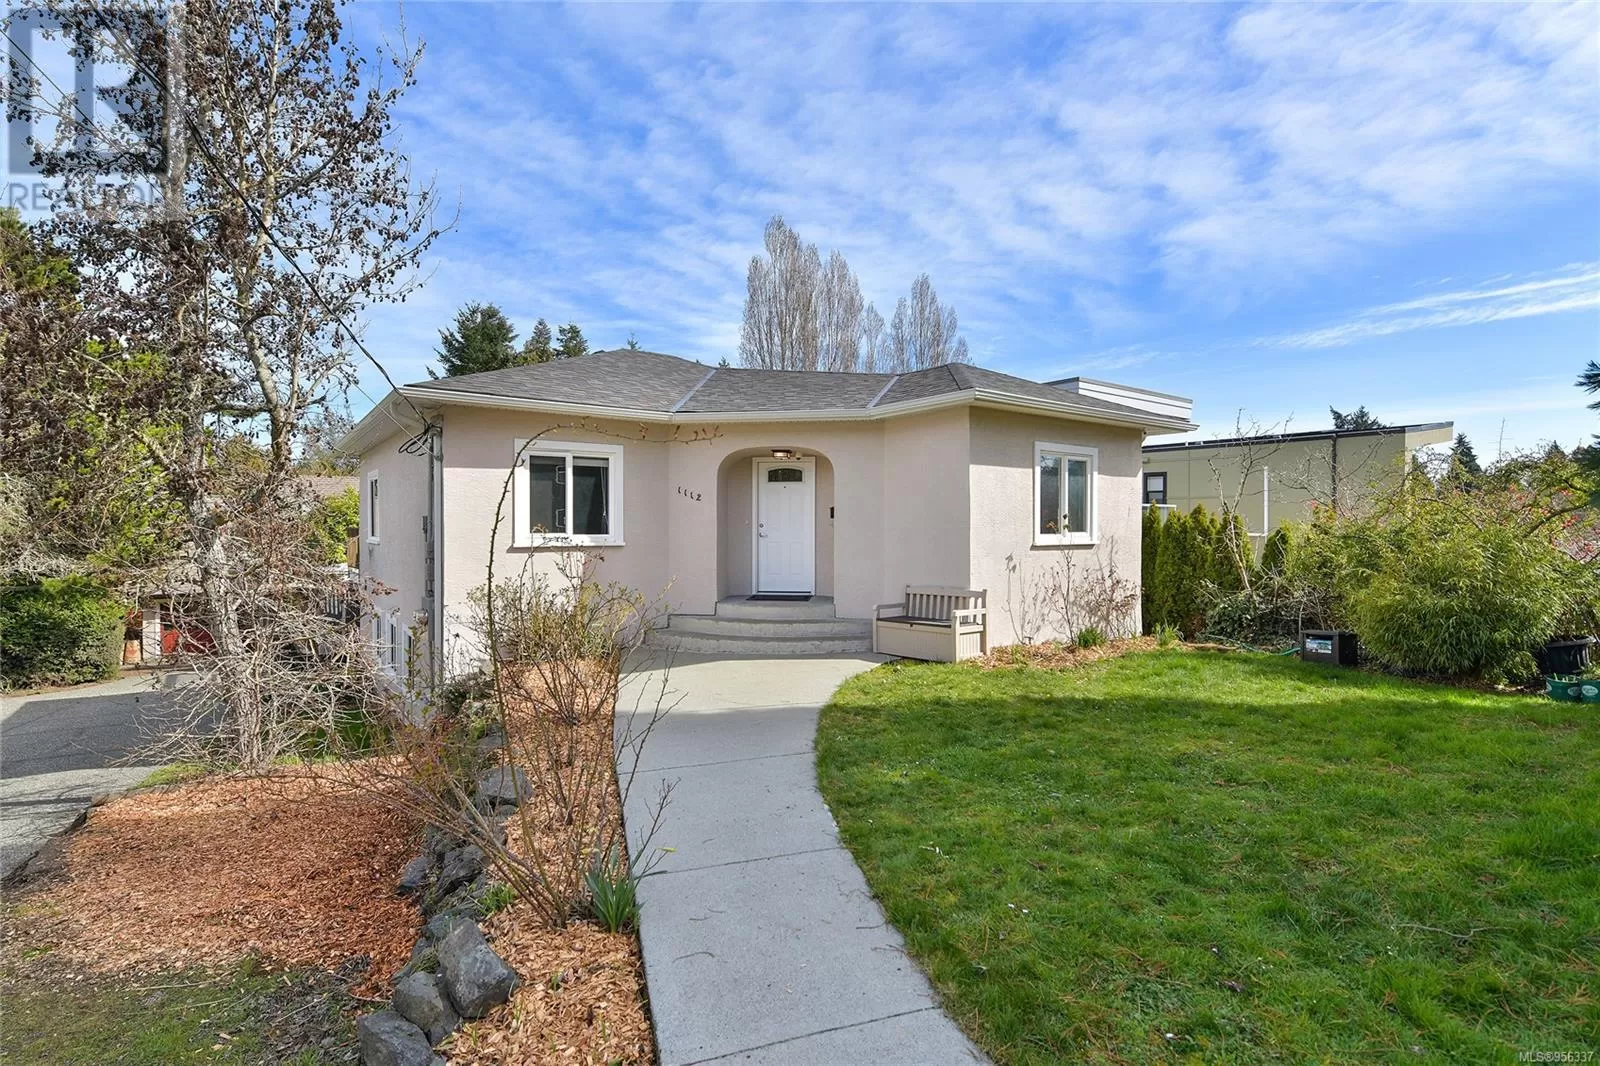 House for rent: 1112 Craigflower Rd, Esquimalt, British Columbia V9A 2Y1